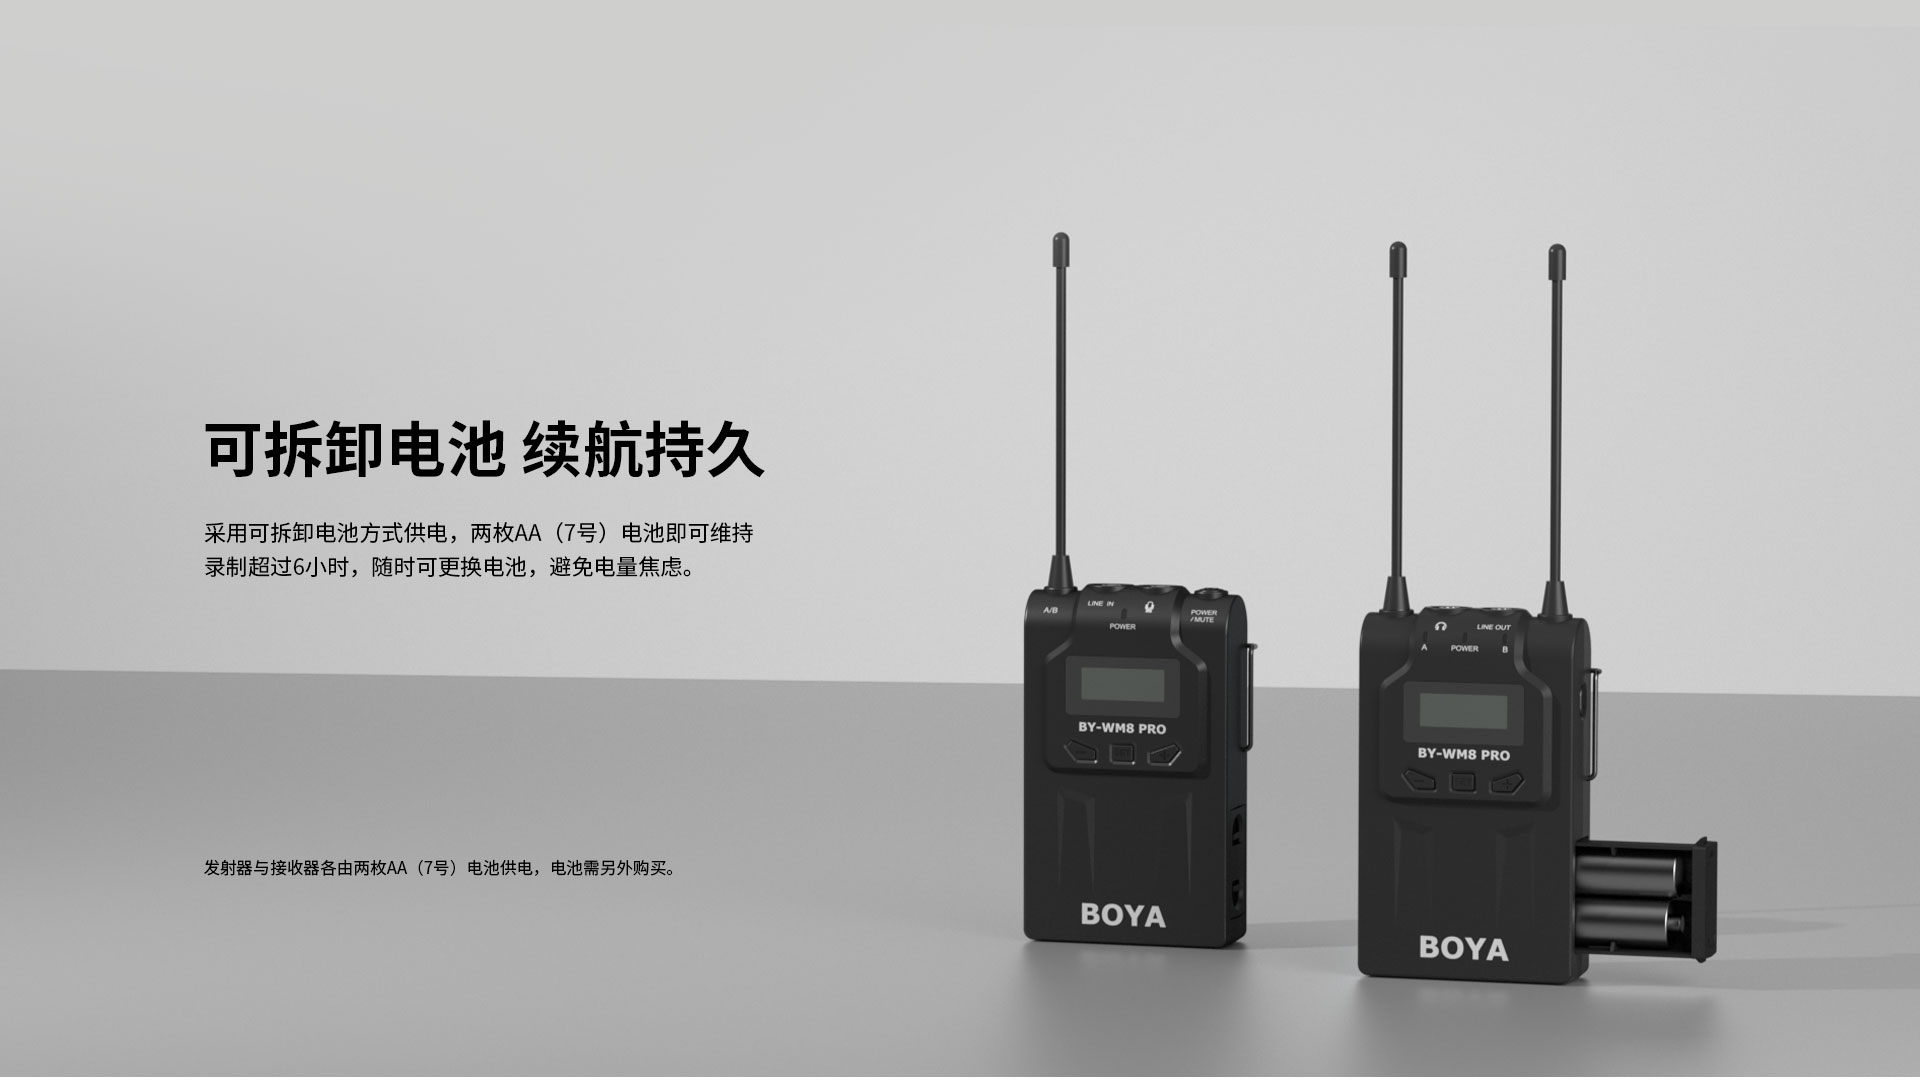 boya博雅wm8 pro UHF无线麦克风